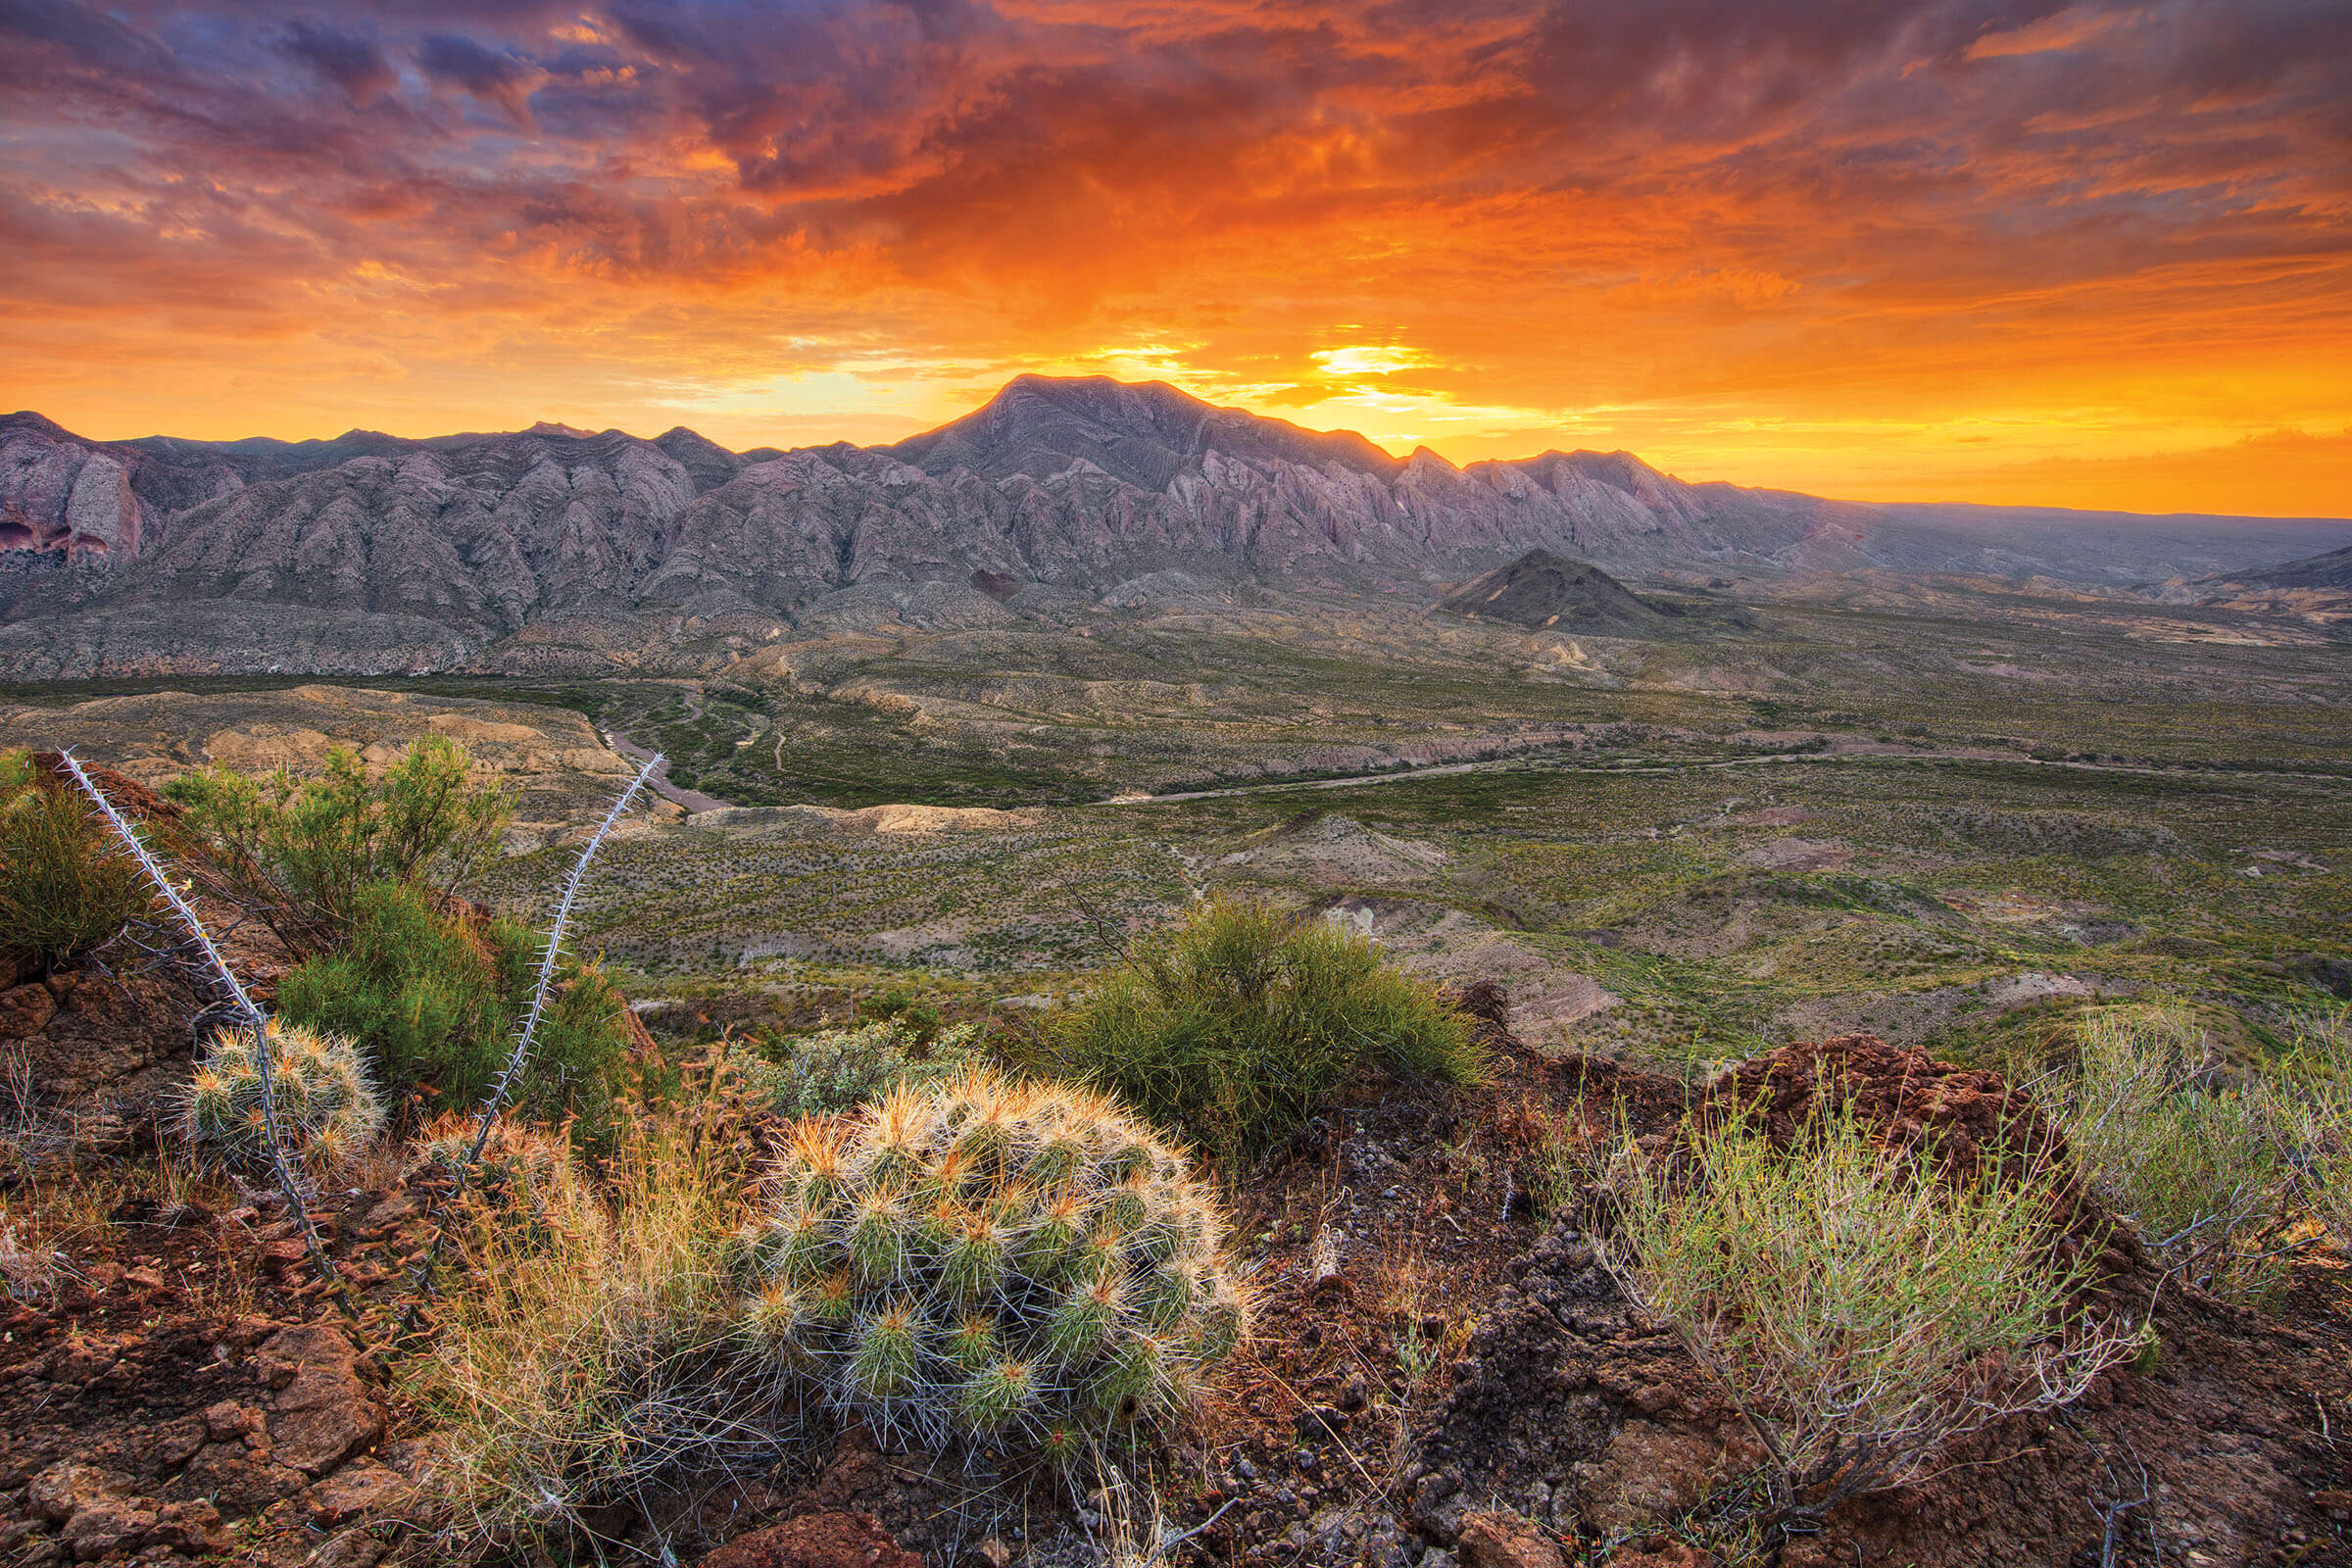 A firey-orange sunrise illuminates greyish-blue mountains in the distance of a desert scene